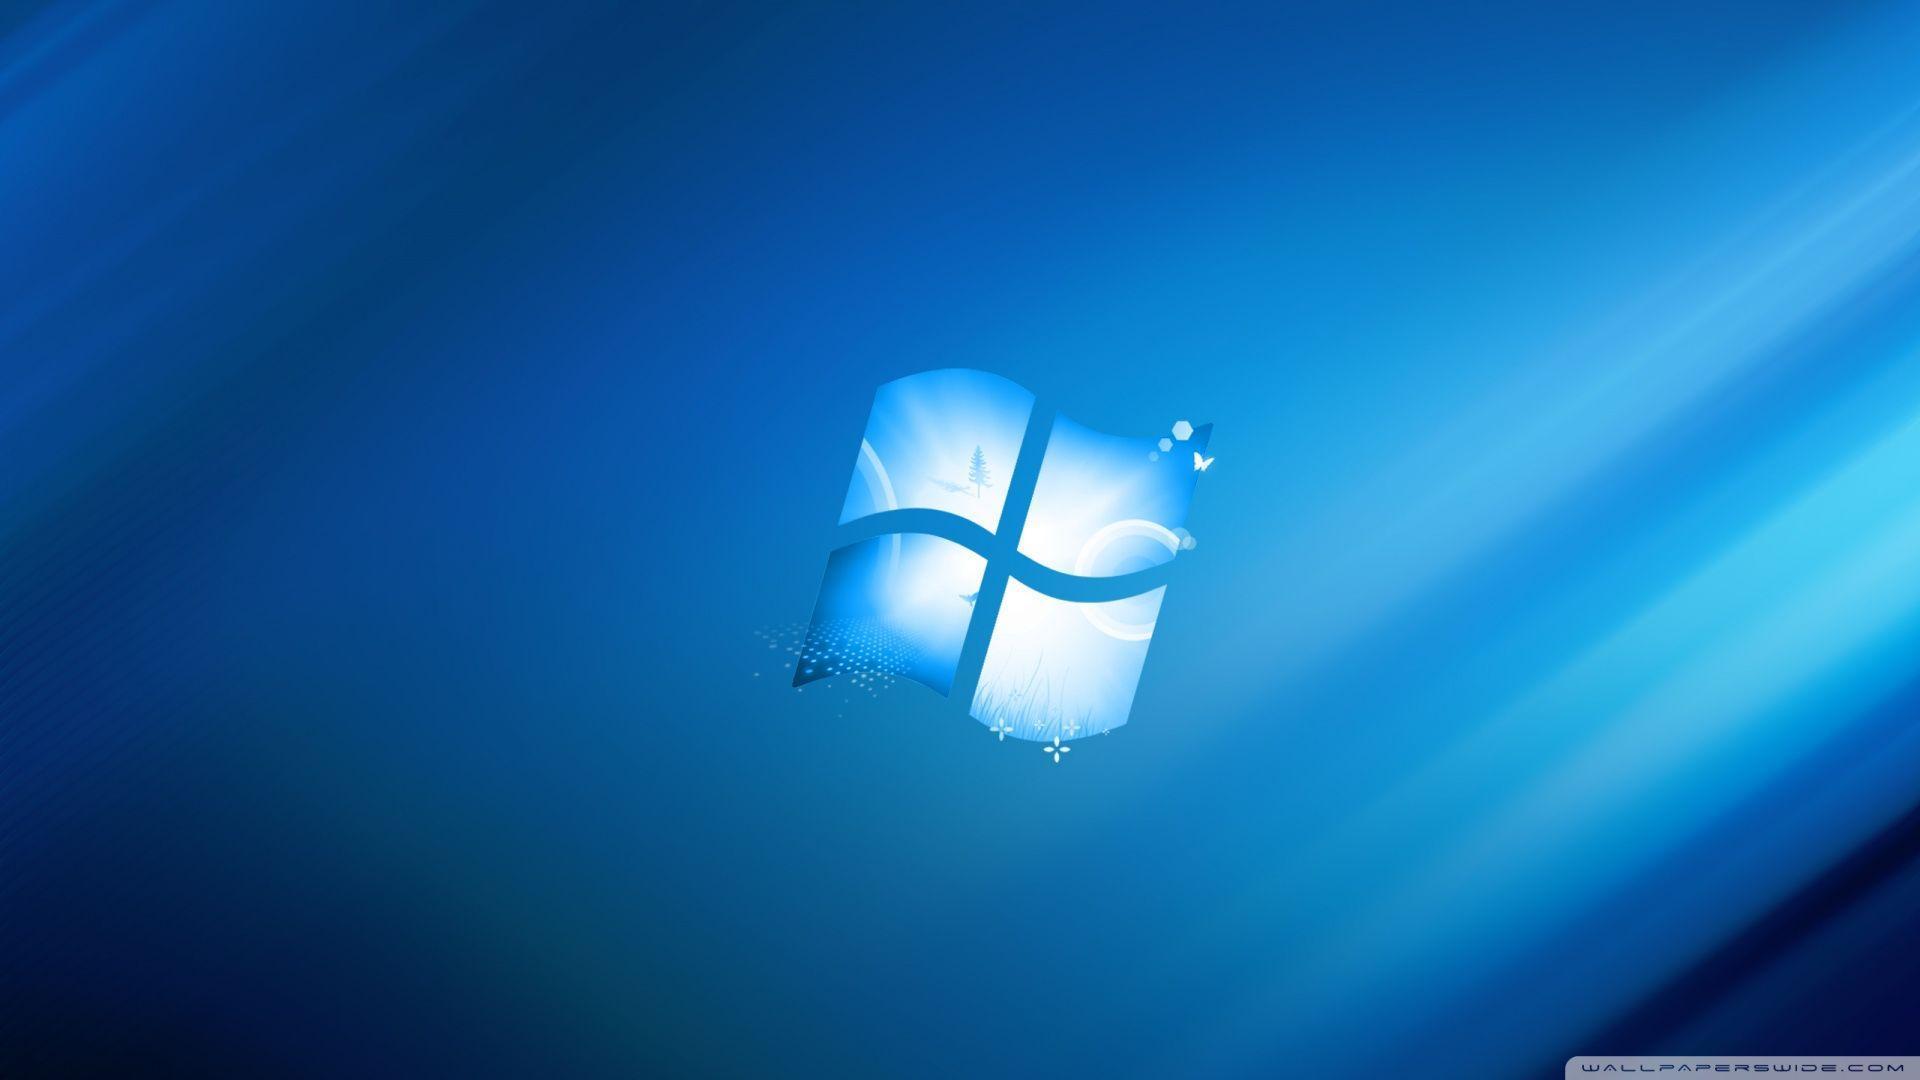 Microsoft Wallpaper Windows 8 Download 10014 HD Picture. Best